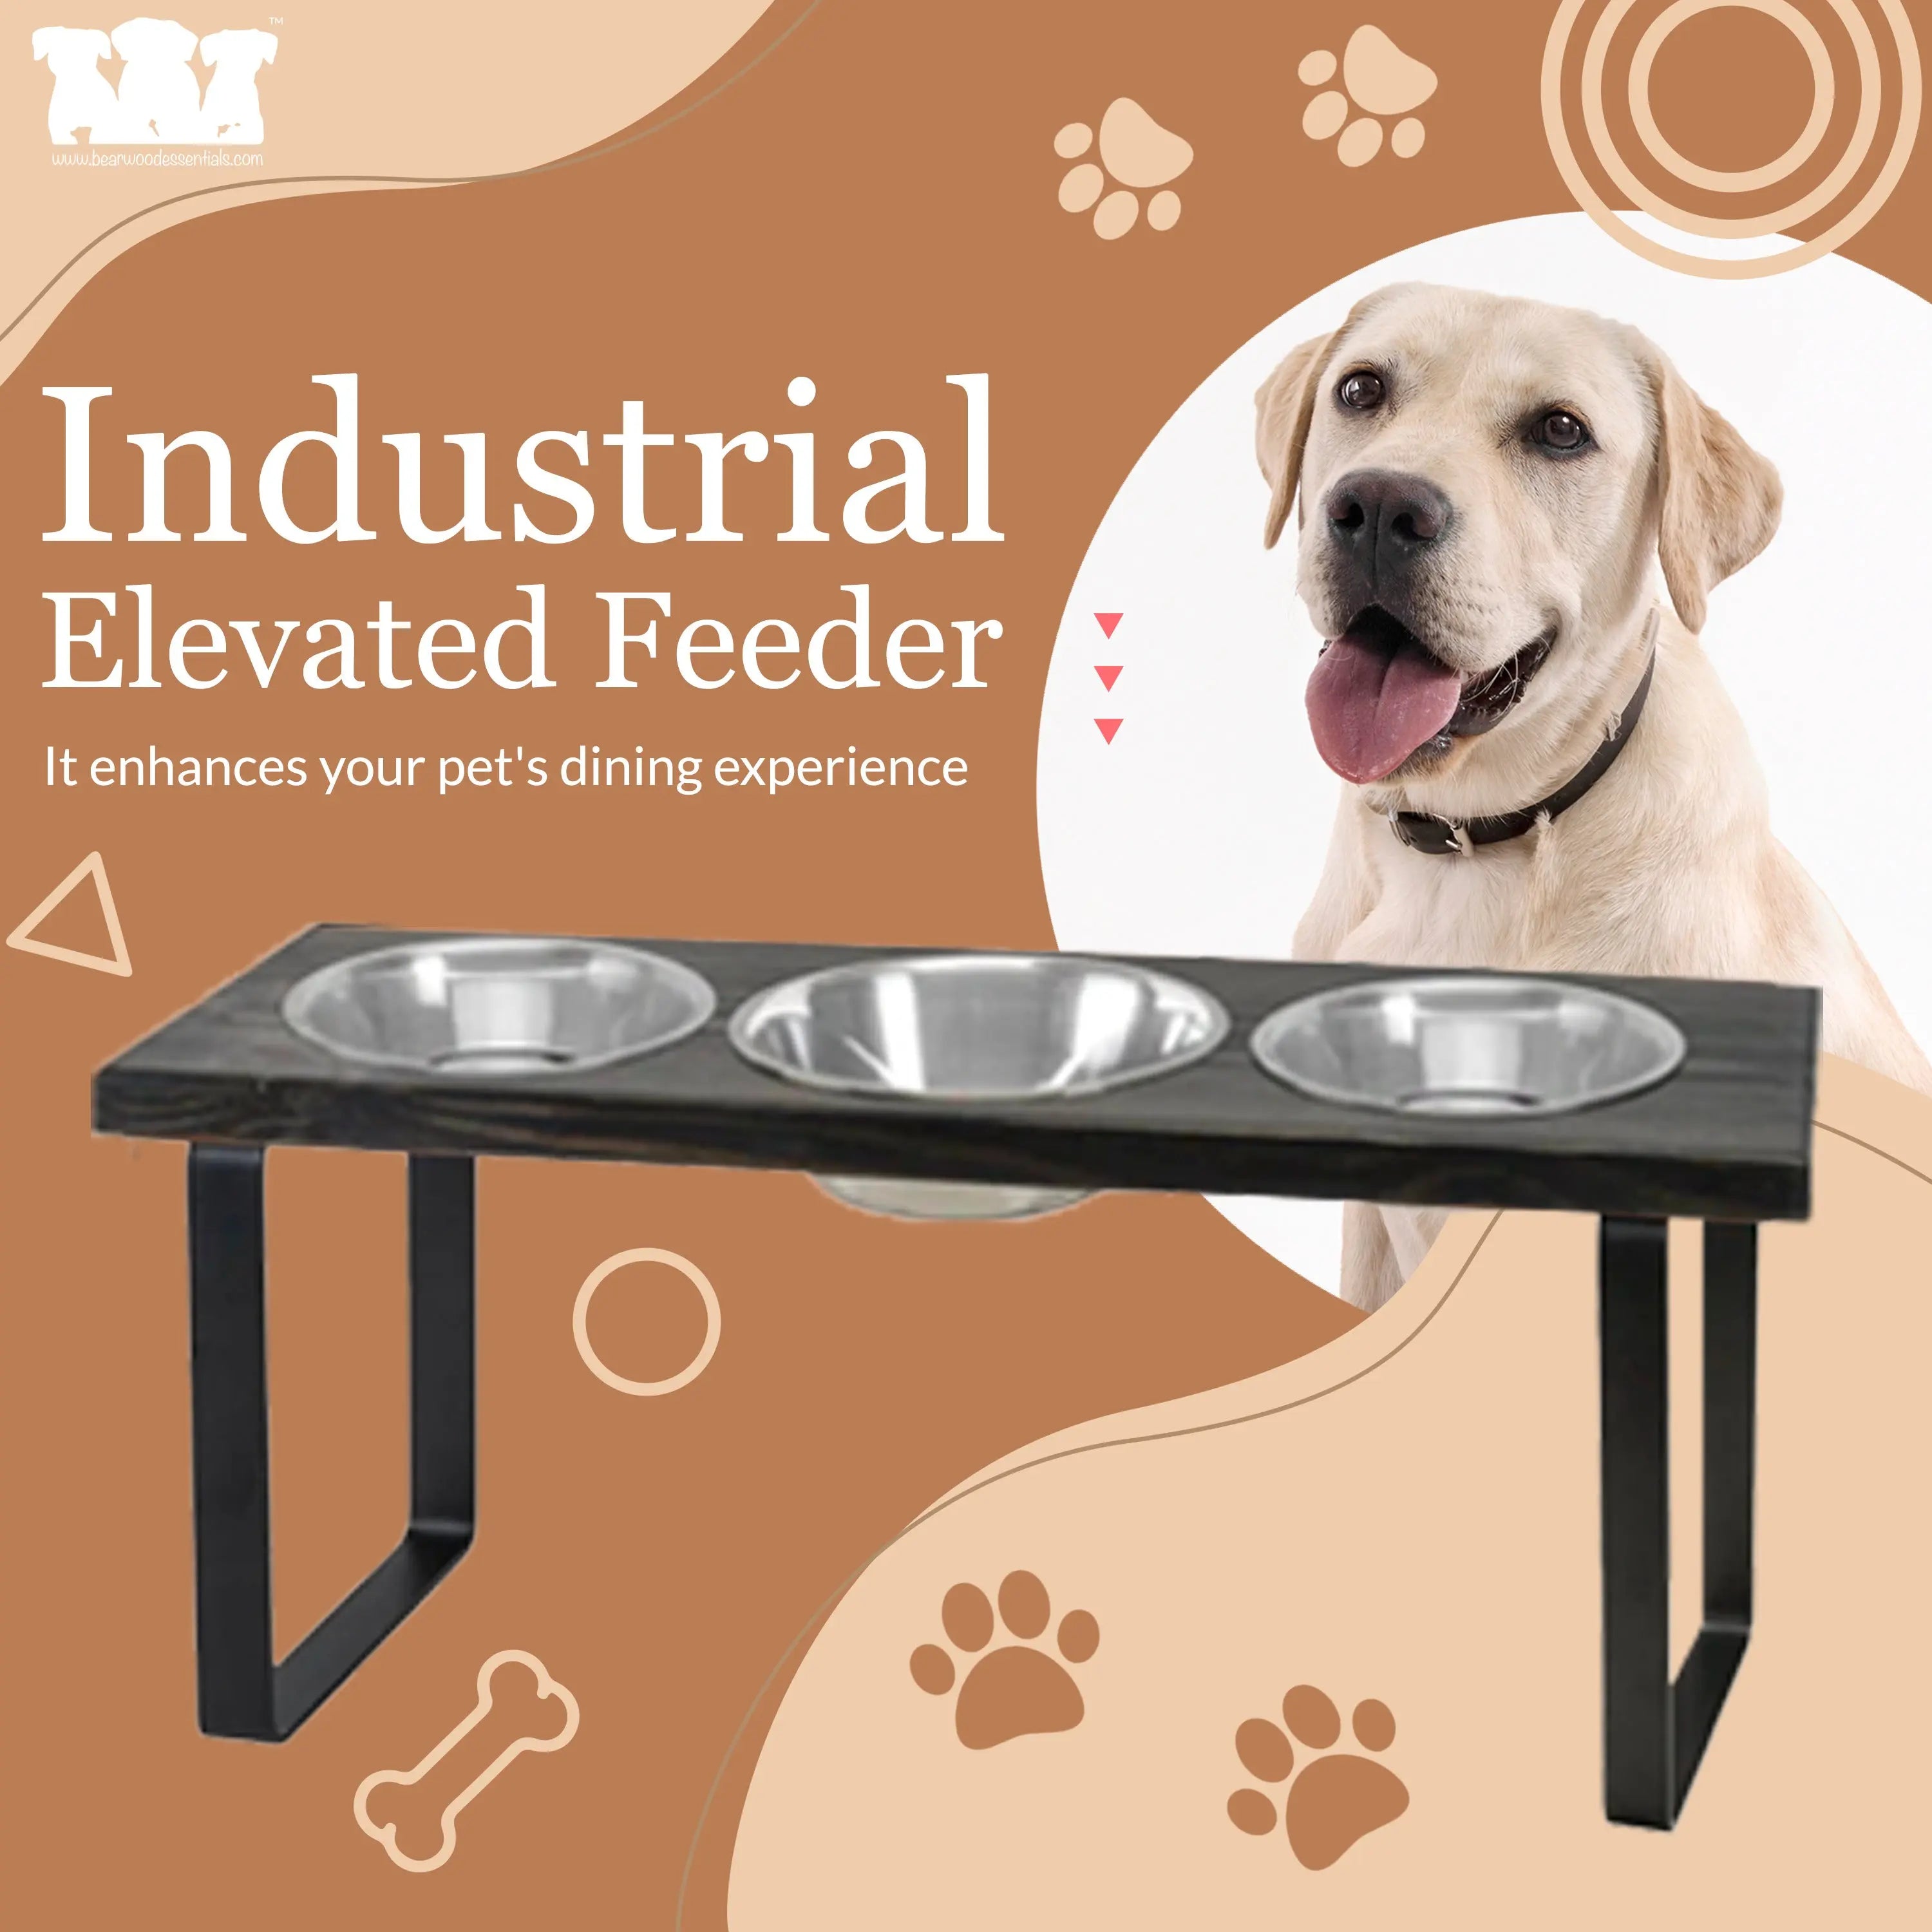 Large Breed Dog Food Stand Modern Dog Feeding Station Elevated